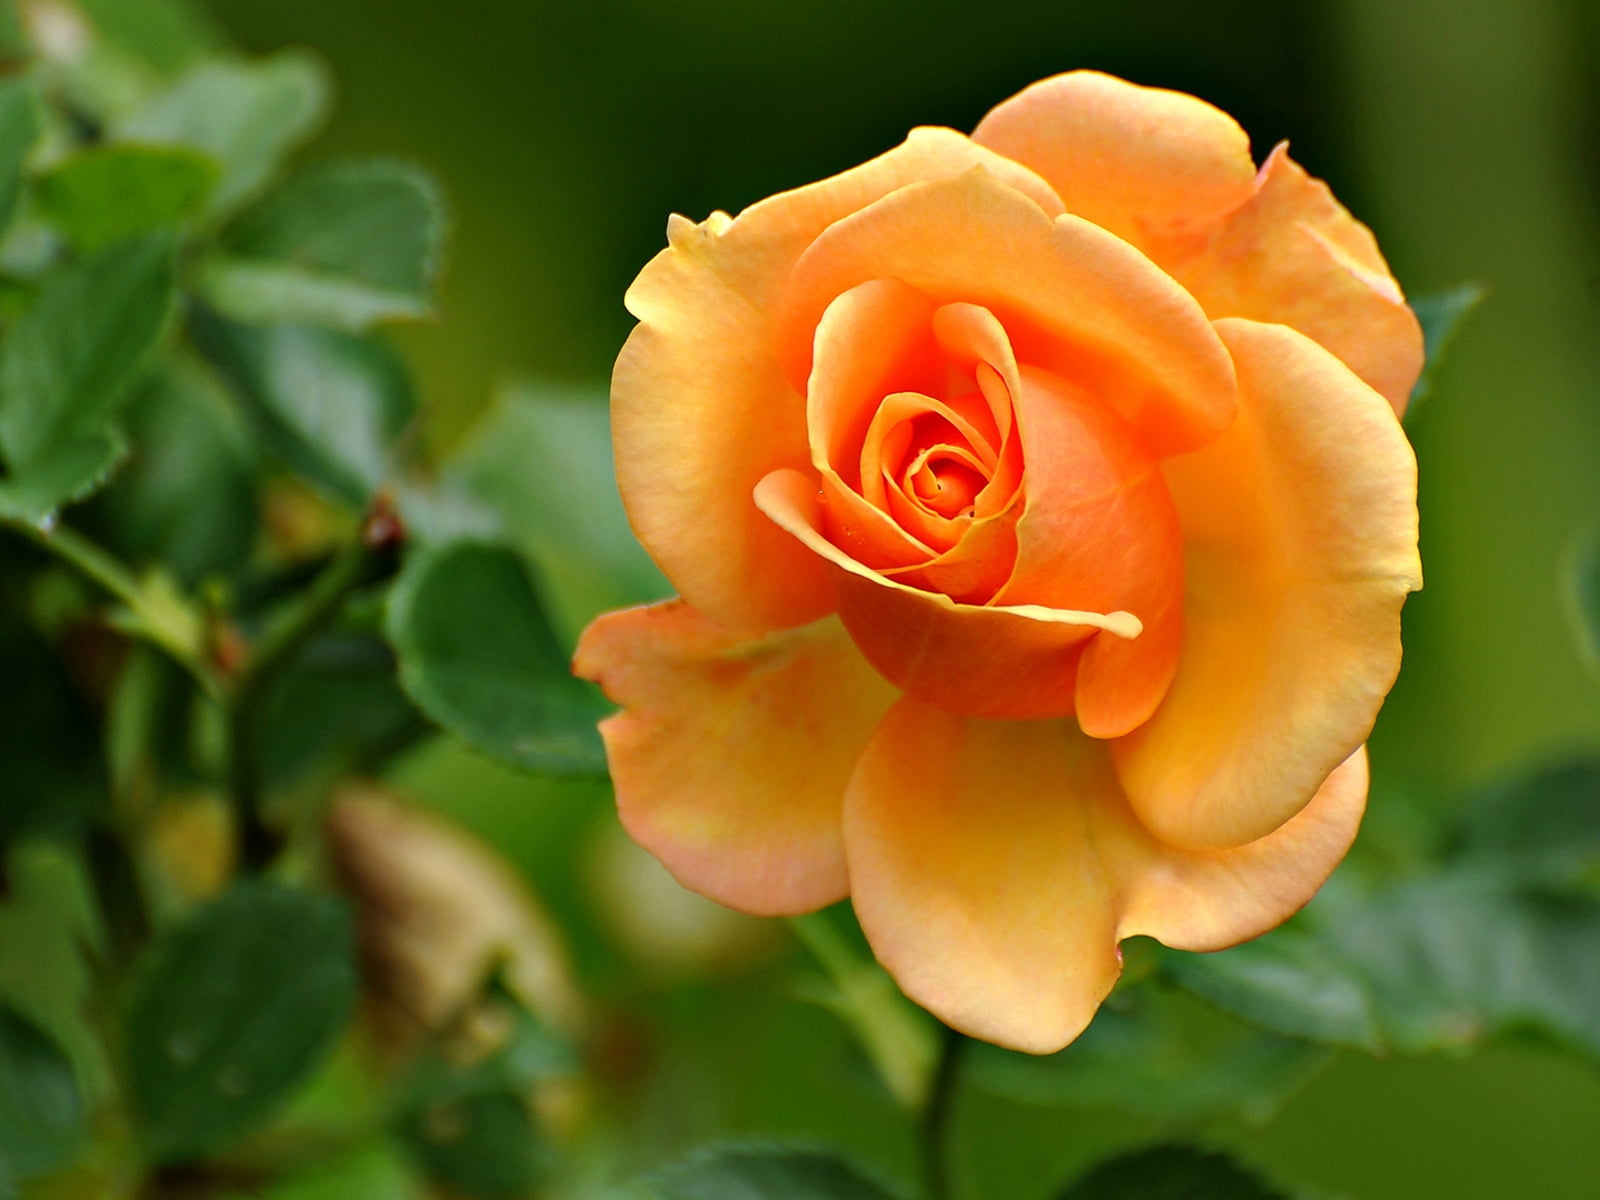 close-up photography of orange rose flower plant